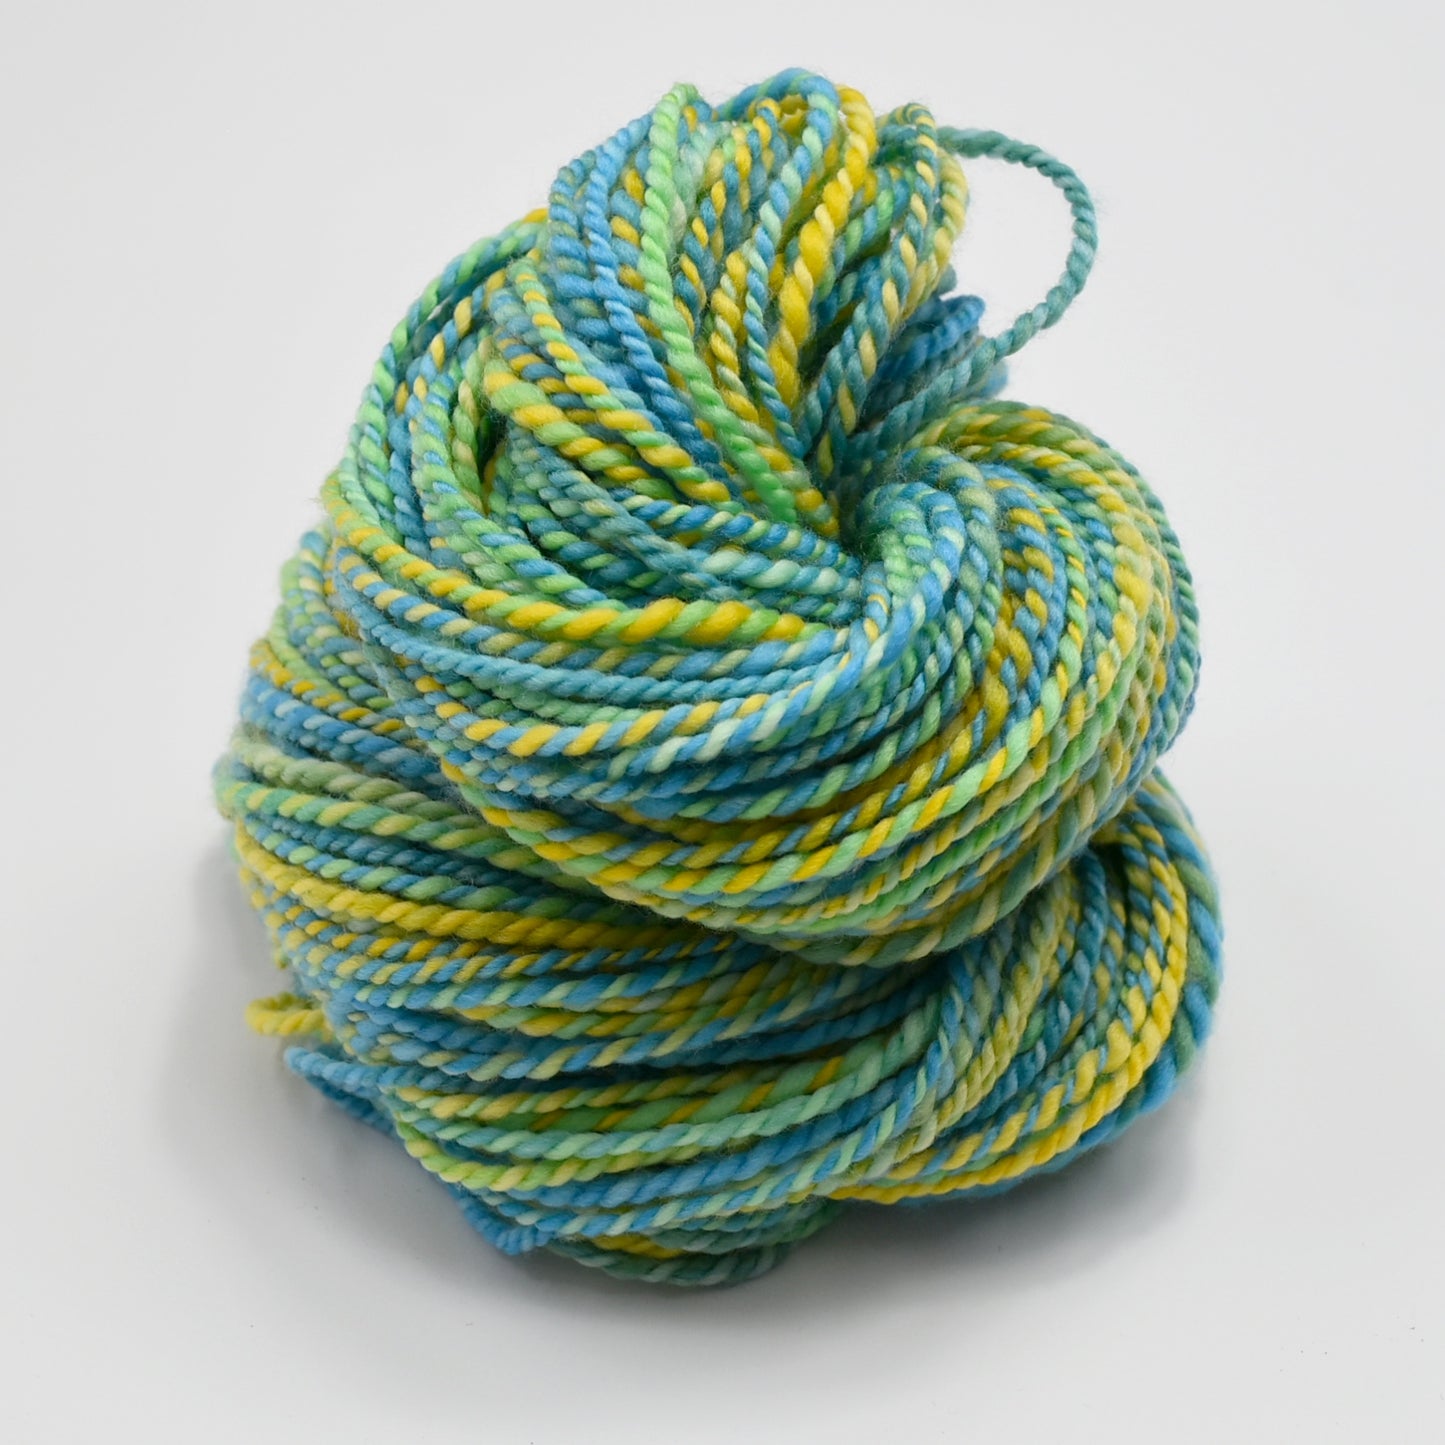 Hand Spun Tasmanian Superwash Merino Wool Yarn in Meadow 13074| Hand Spun Yarn | Sally Ridgway | Shop Wool, Felt and Fibre Online